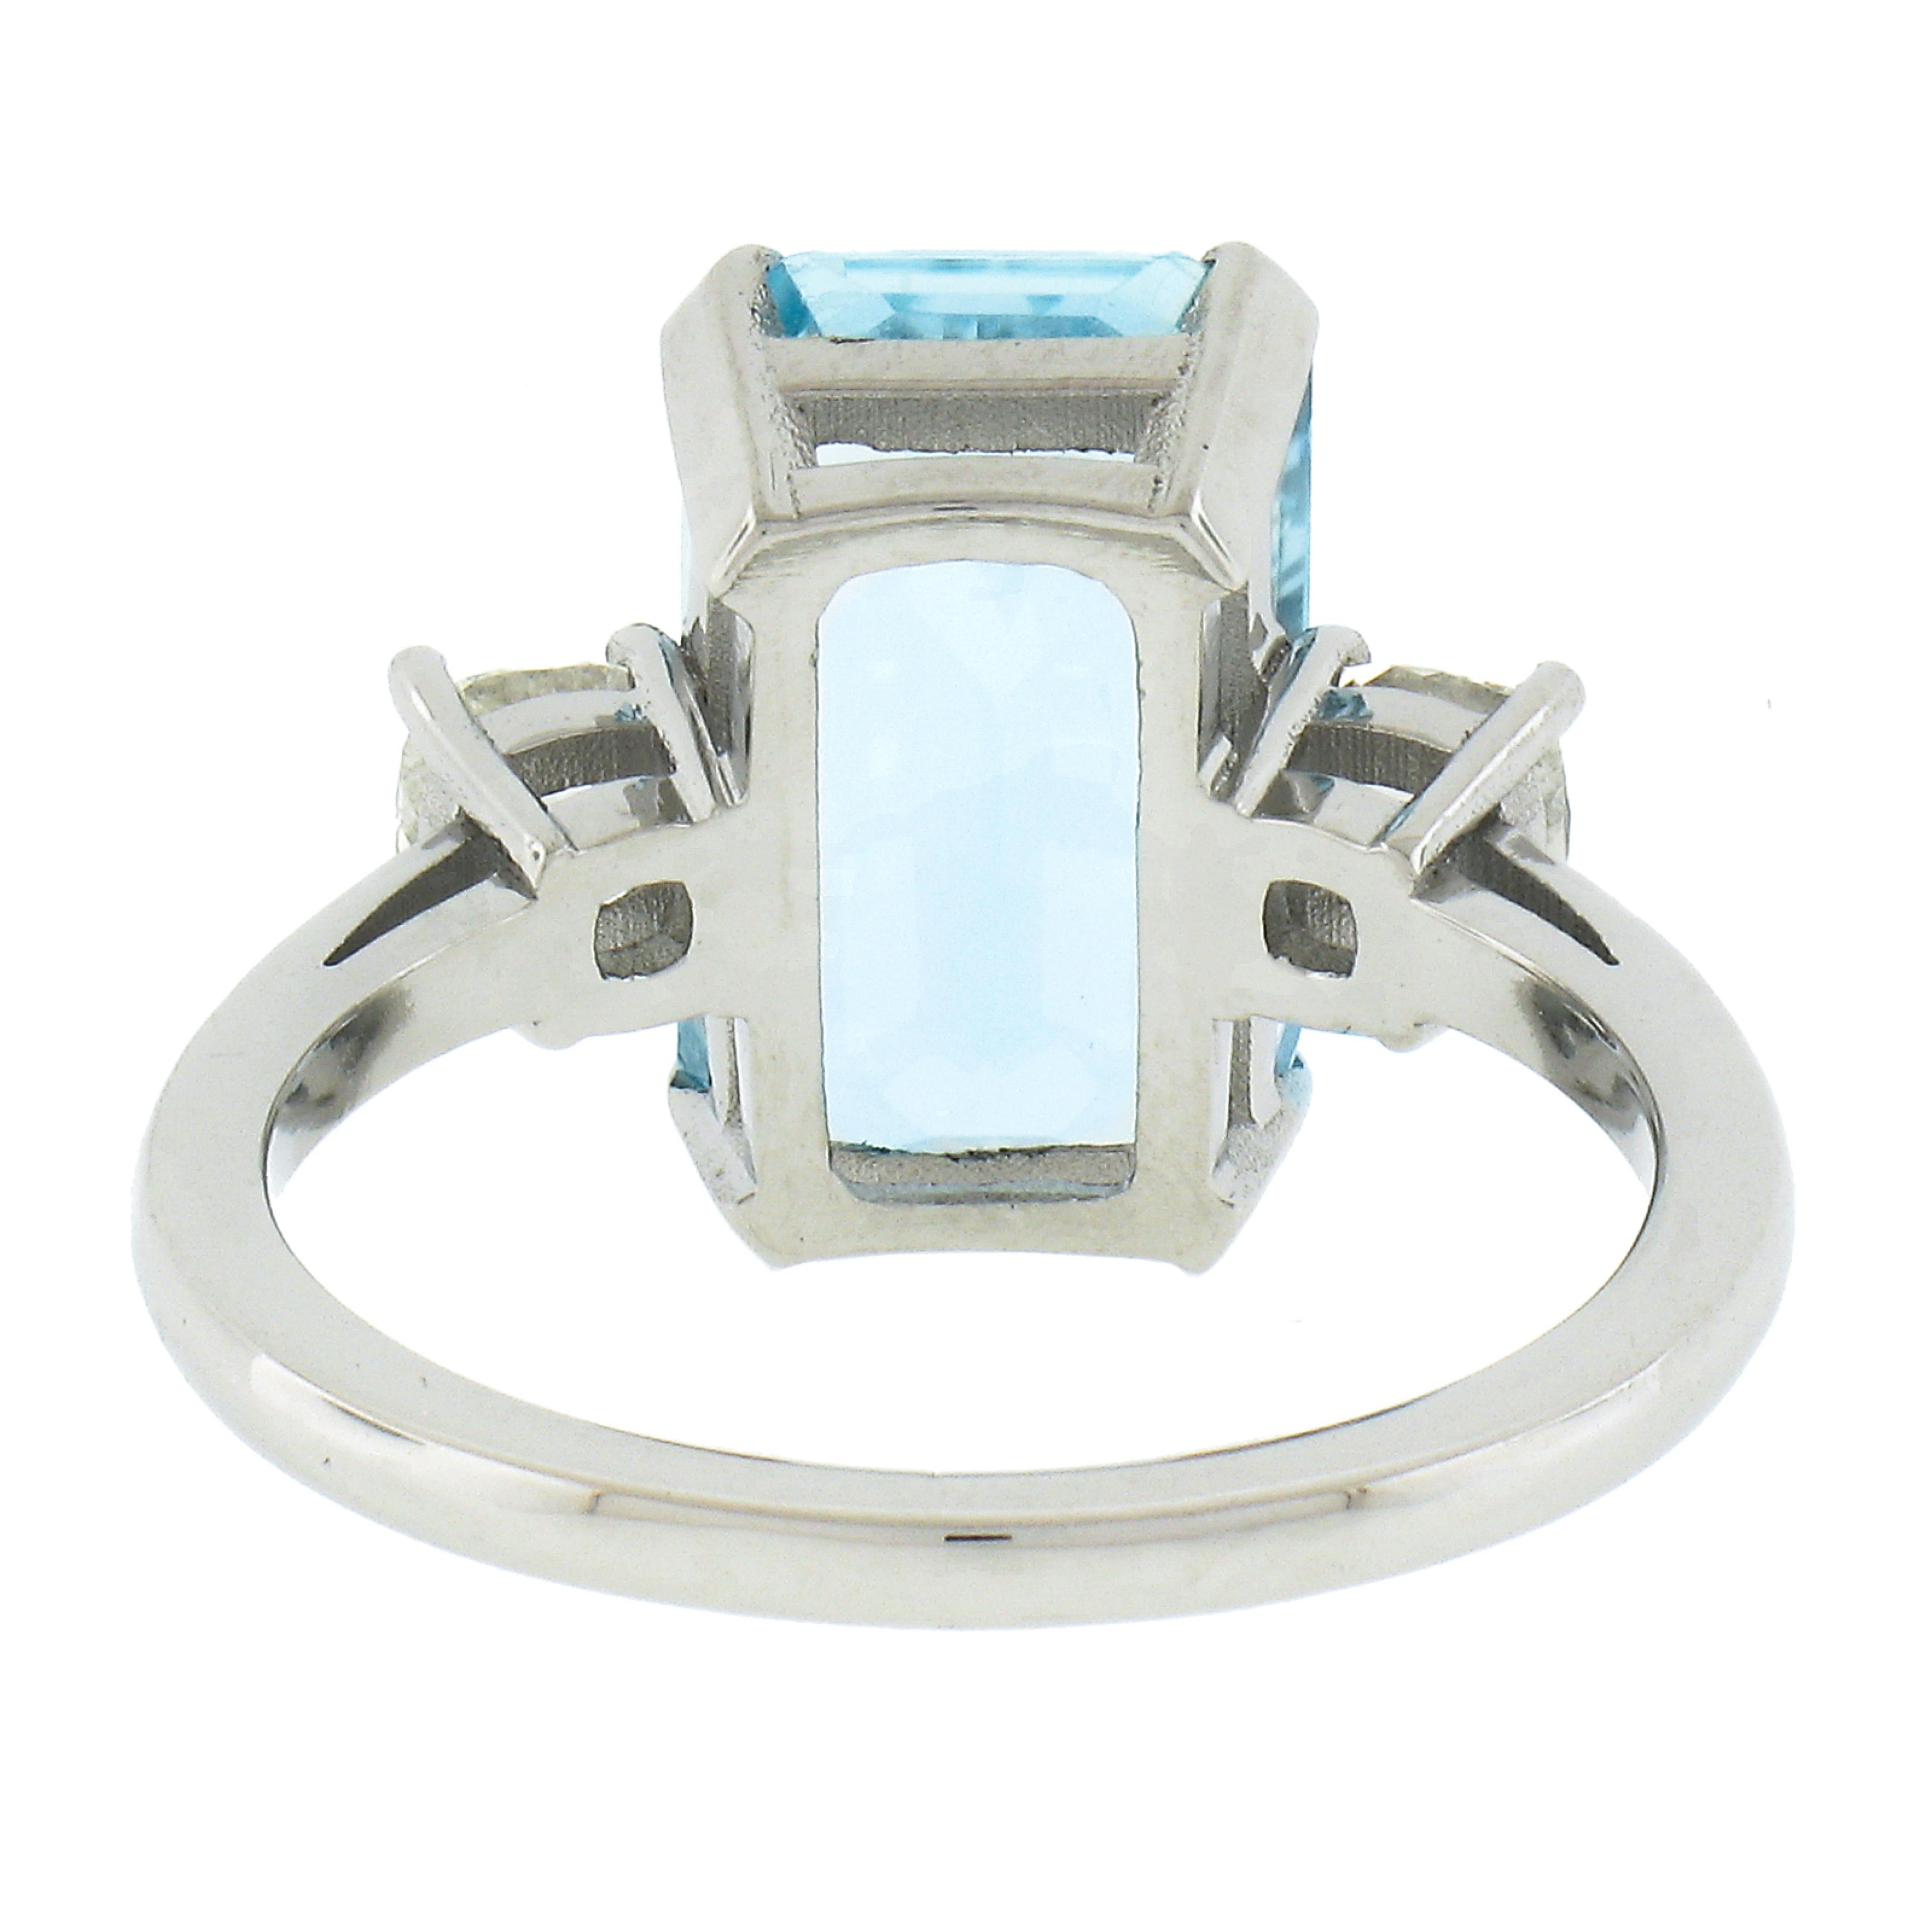 Platinum 4.55ctw Elongated Step Cut Aquamarine & Old Cut Diamond Cocktail Ring For Sale 2